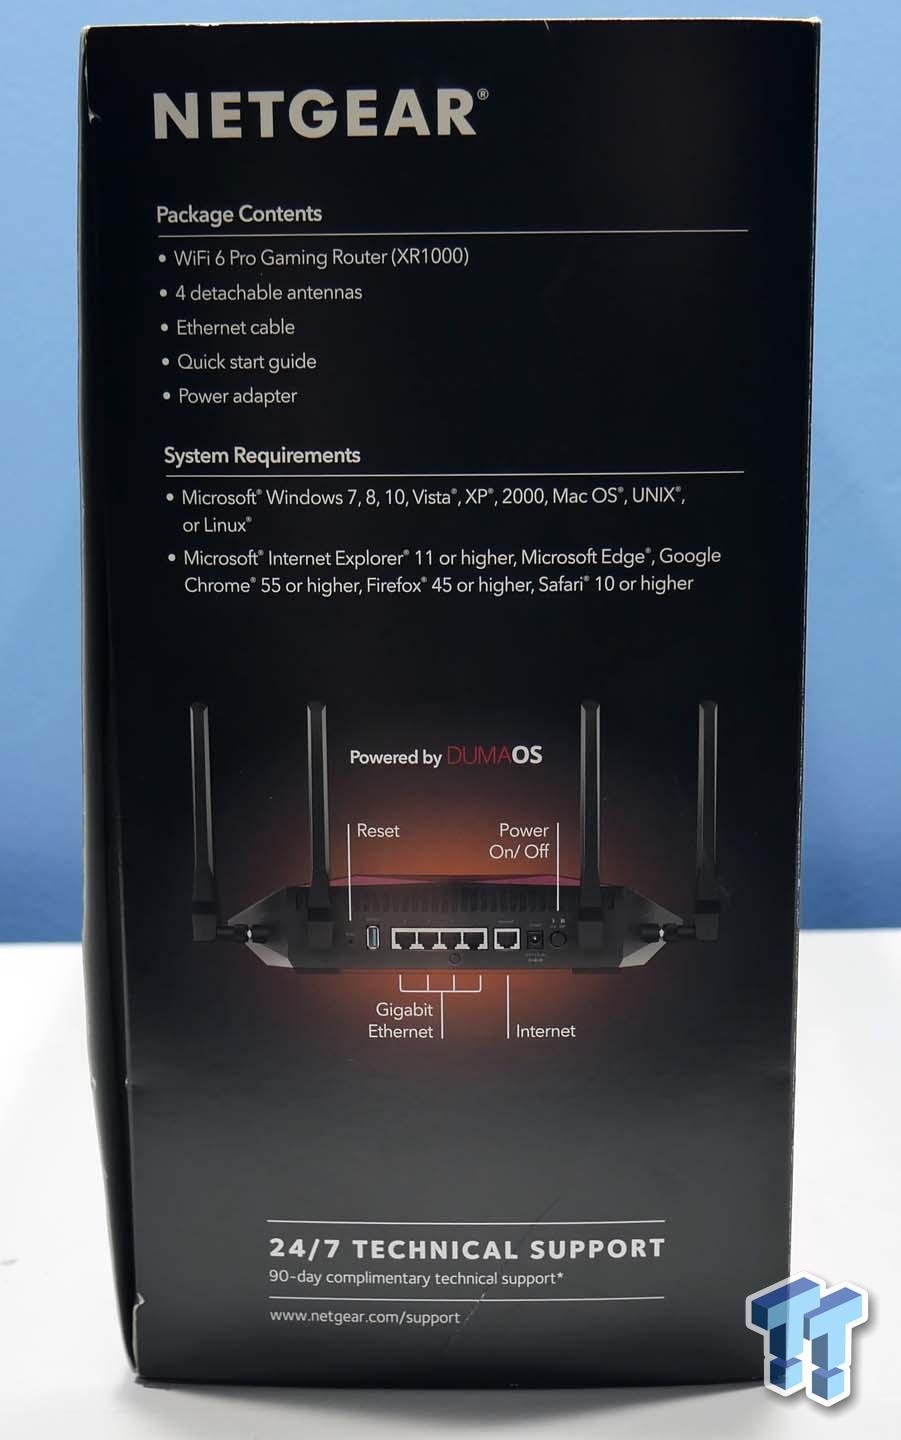 Nighthawk X4S AC2600 Smart Wi-Fi Router review: A powerful Wi-Fi